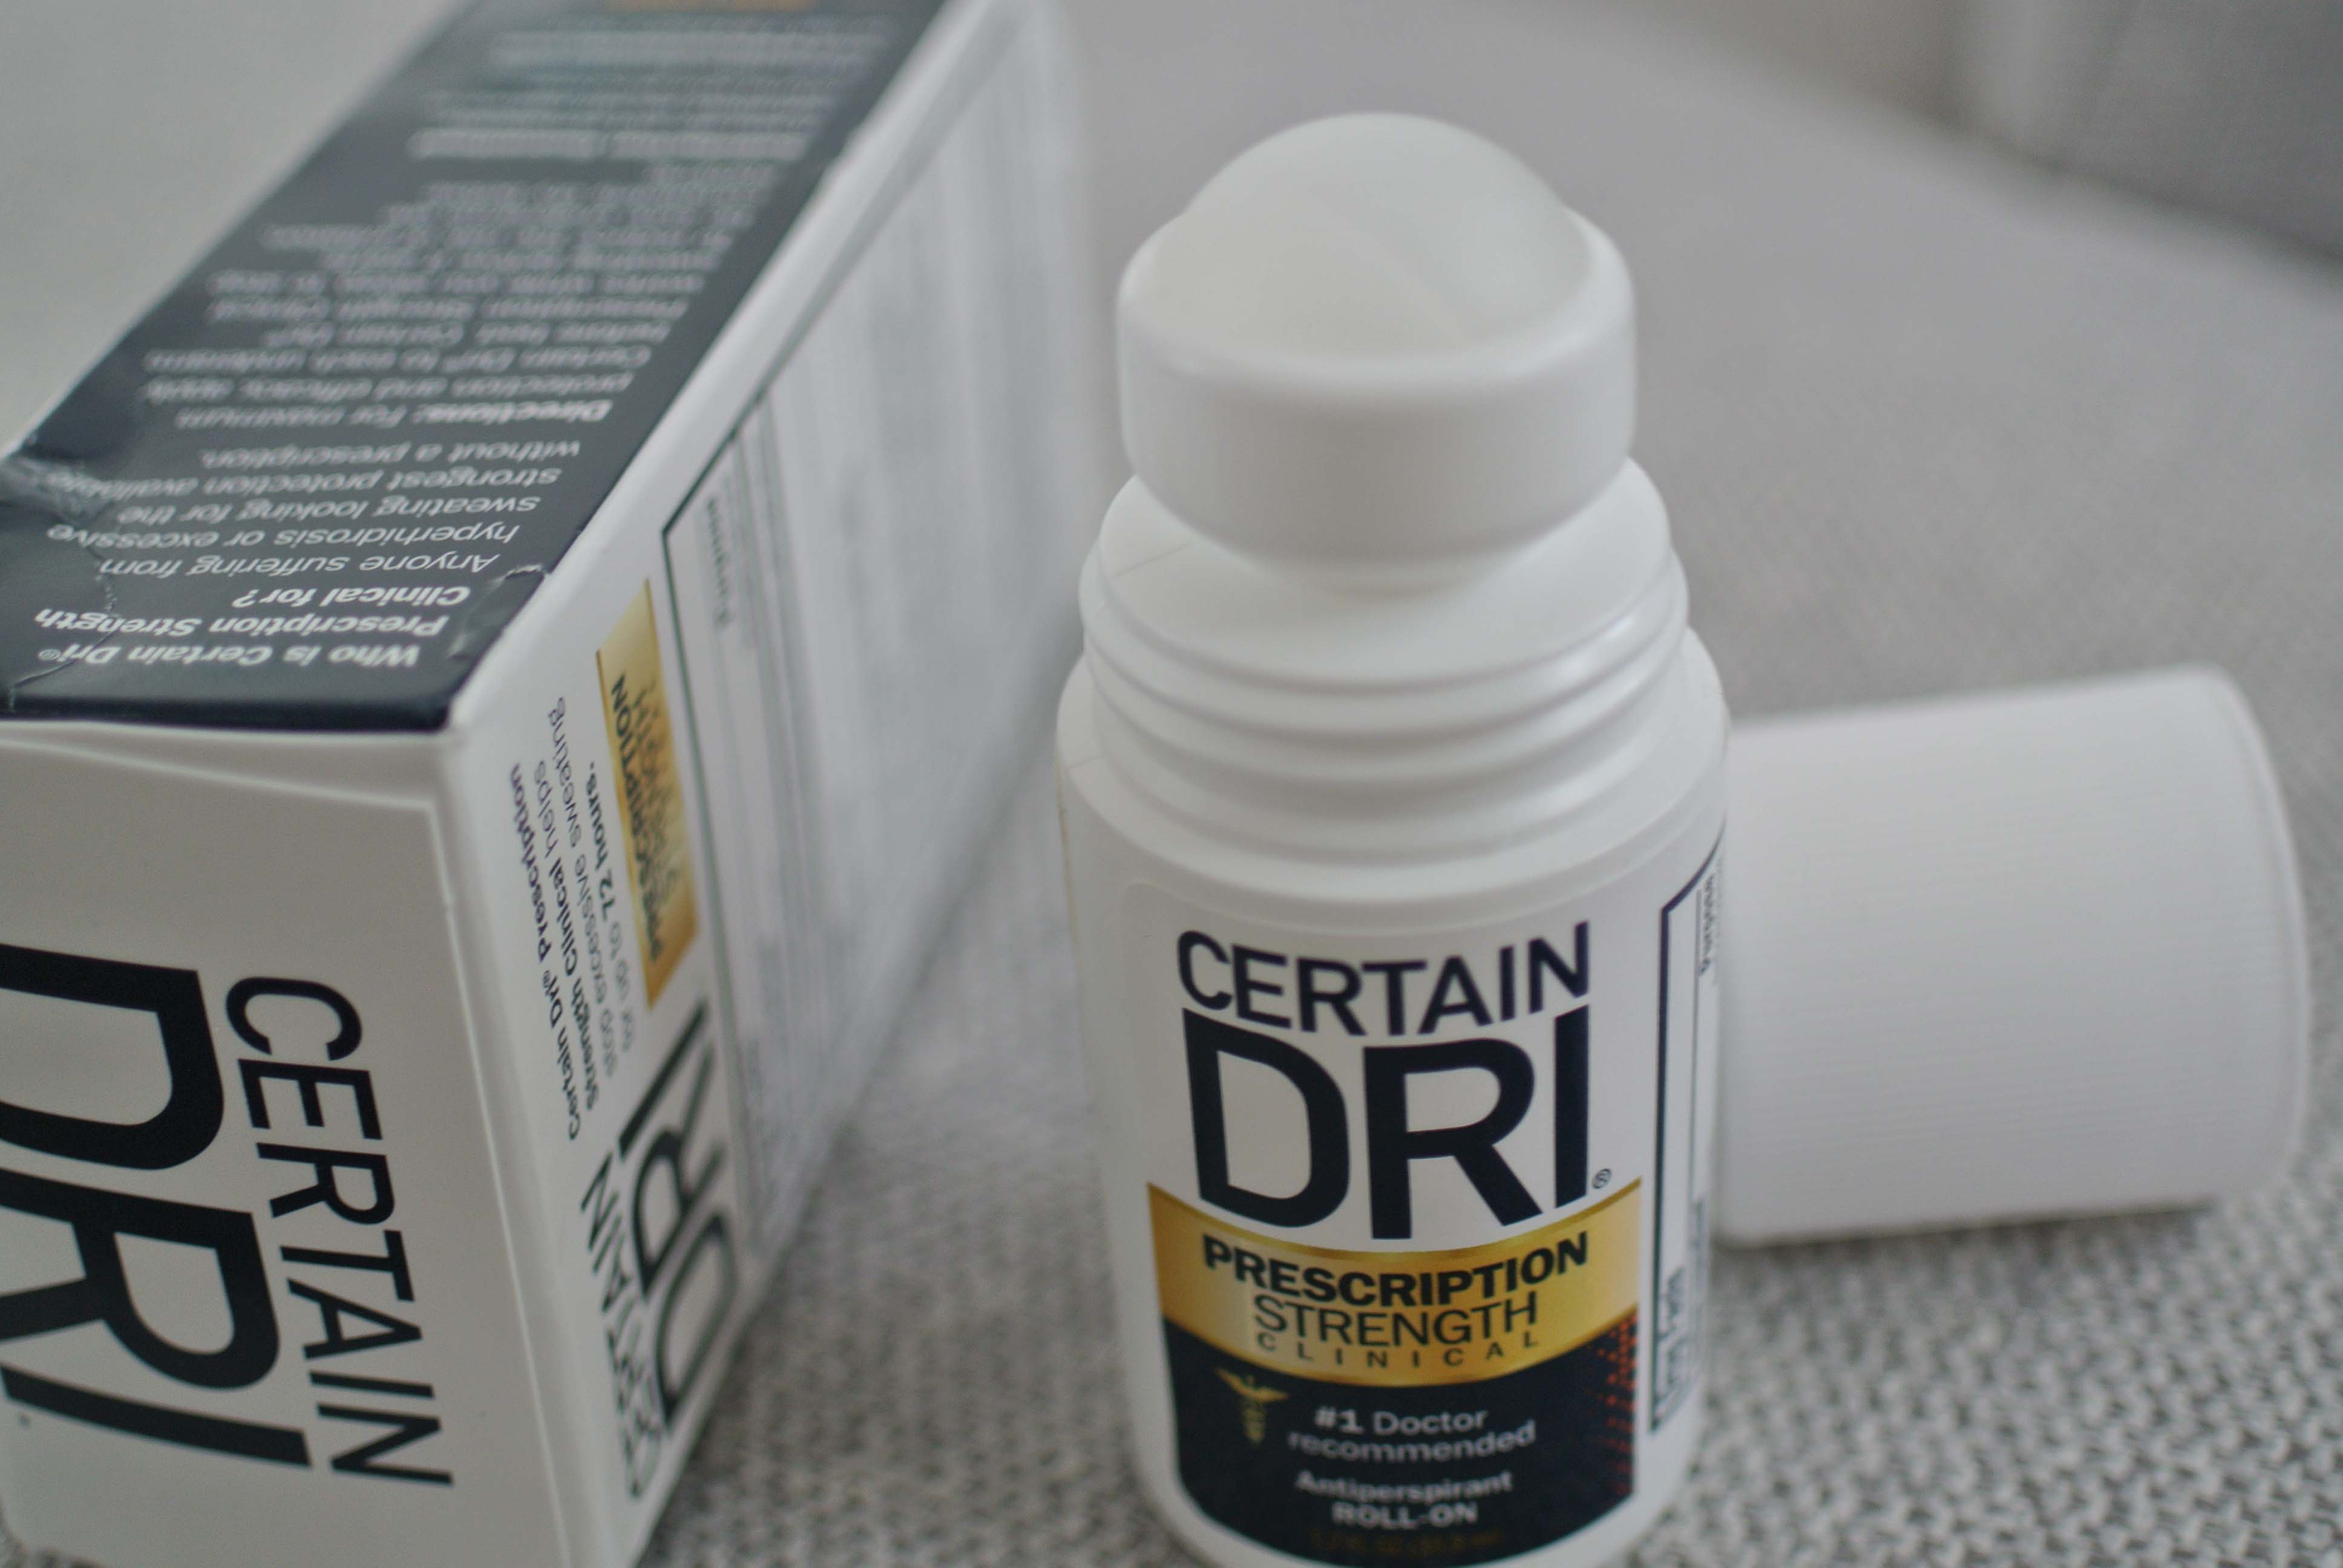 
Certain Dri Review – An effective treatment for excessive underarm sweat
